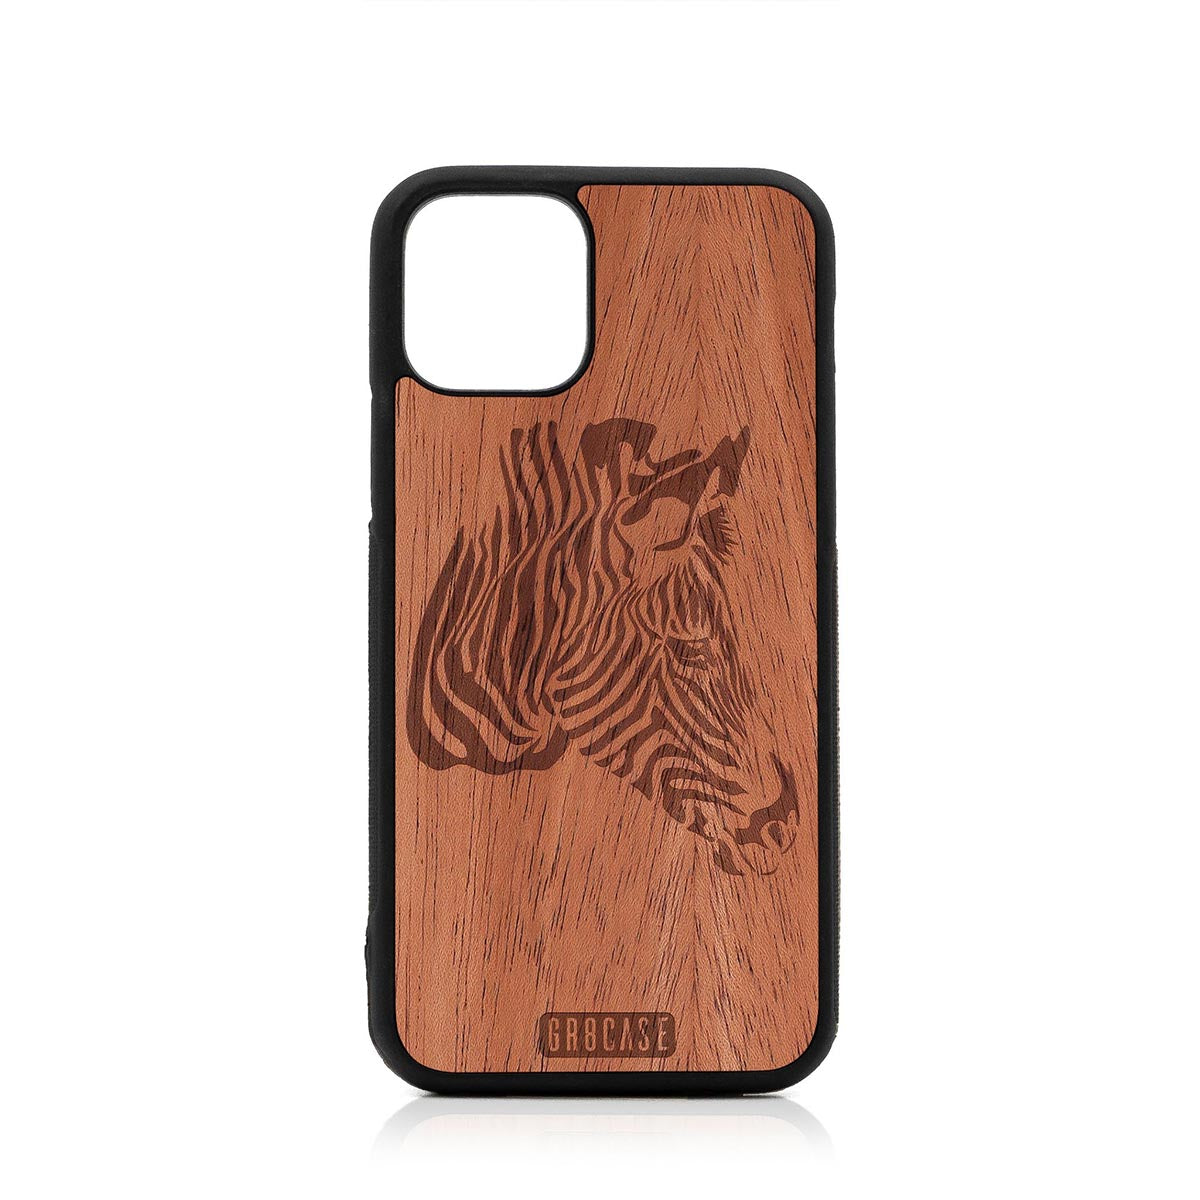 Zebra Design Wood Case For iPhone 11 Pro